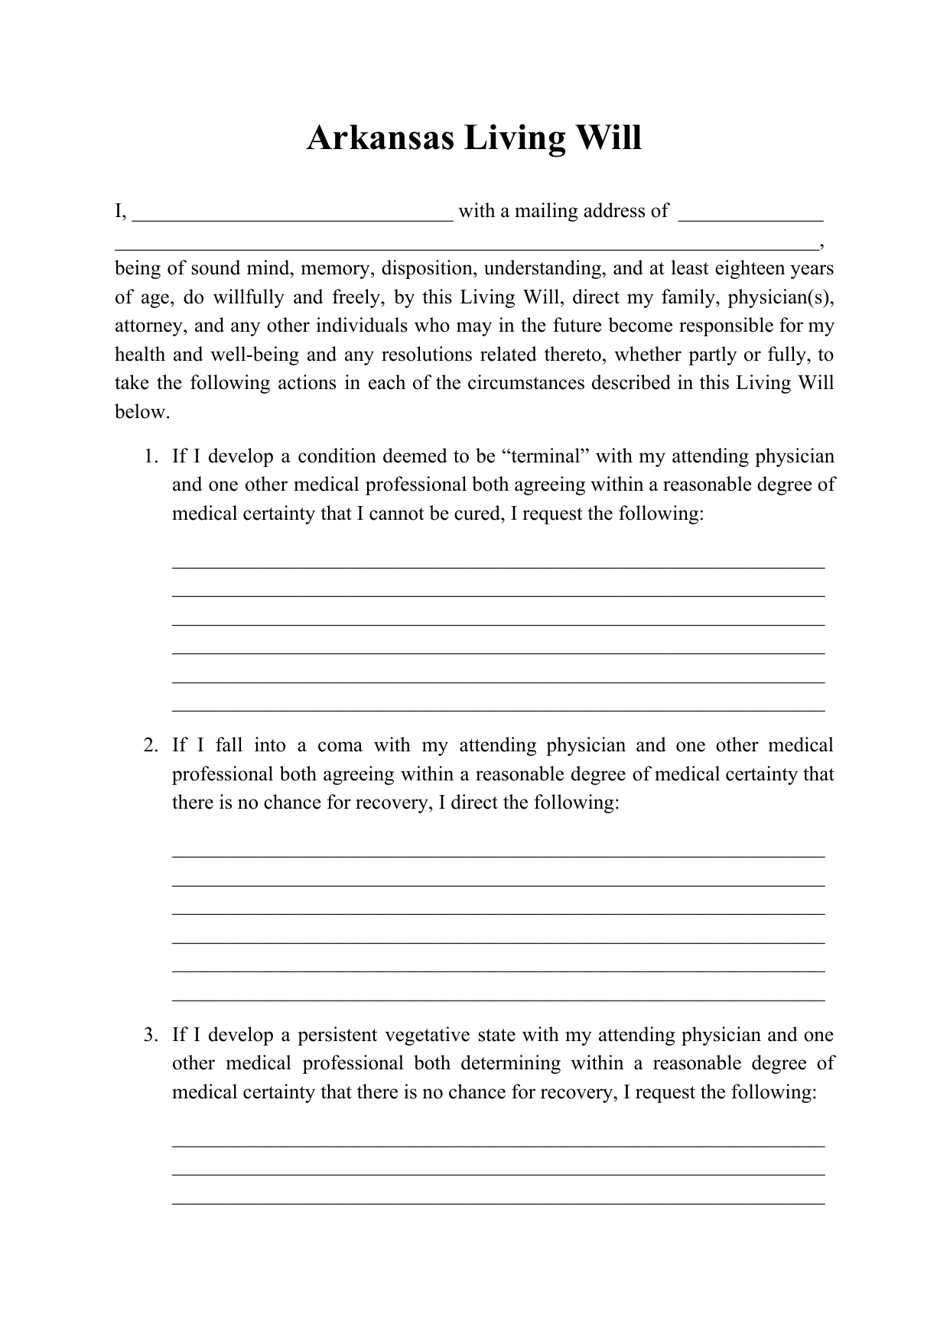 arkansas-living-will-form-download-printable-pdf-templateroller